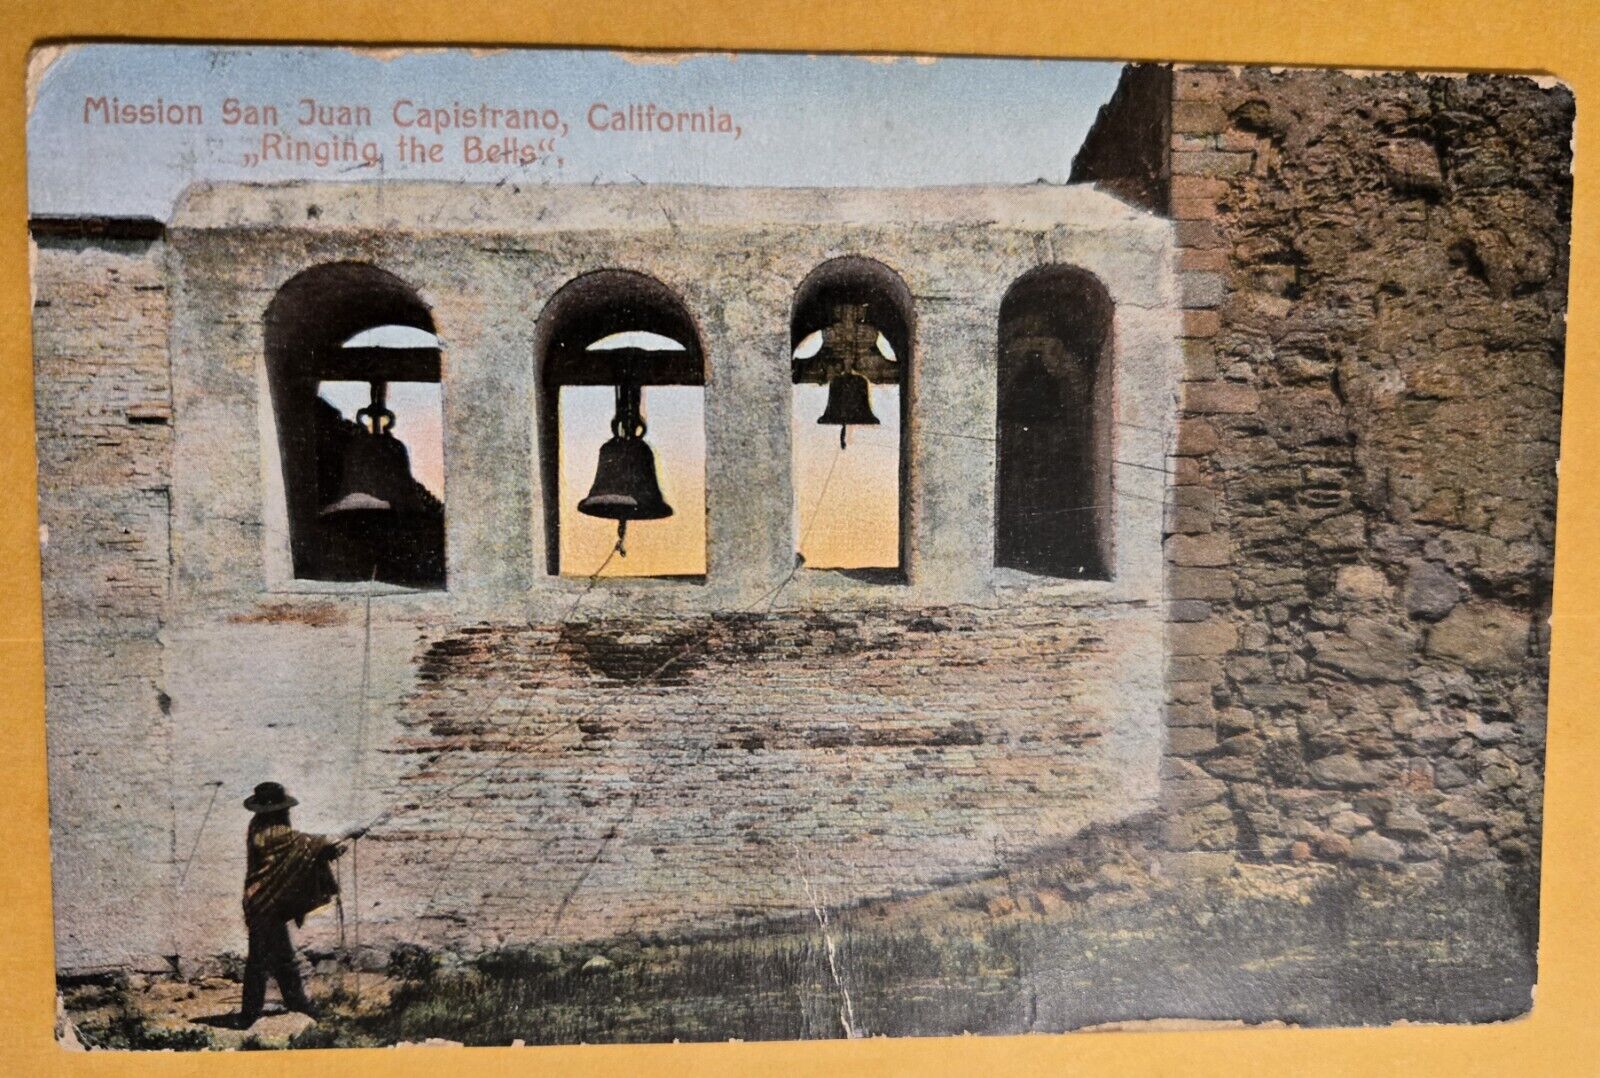 Used 1908 Postcard Mission Bells, San Juan Capistrano Mission, CA J2 AS IS 